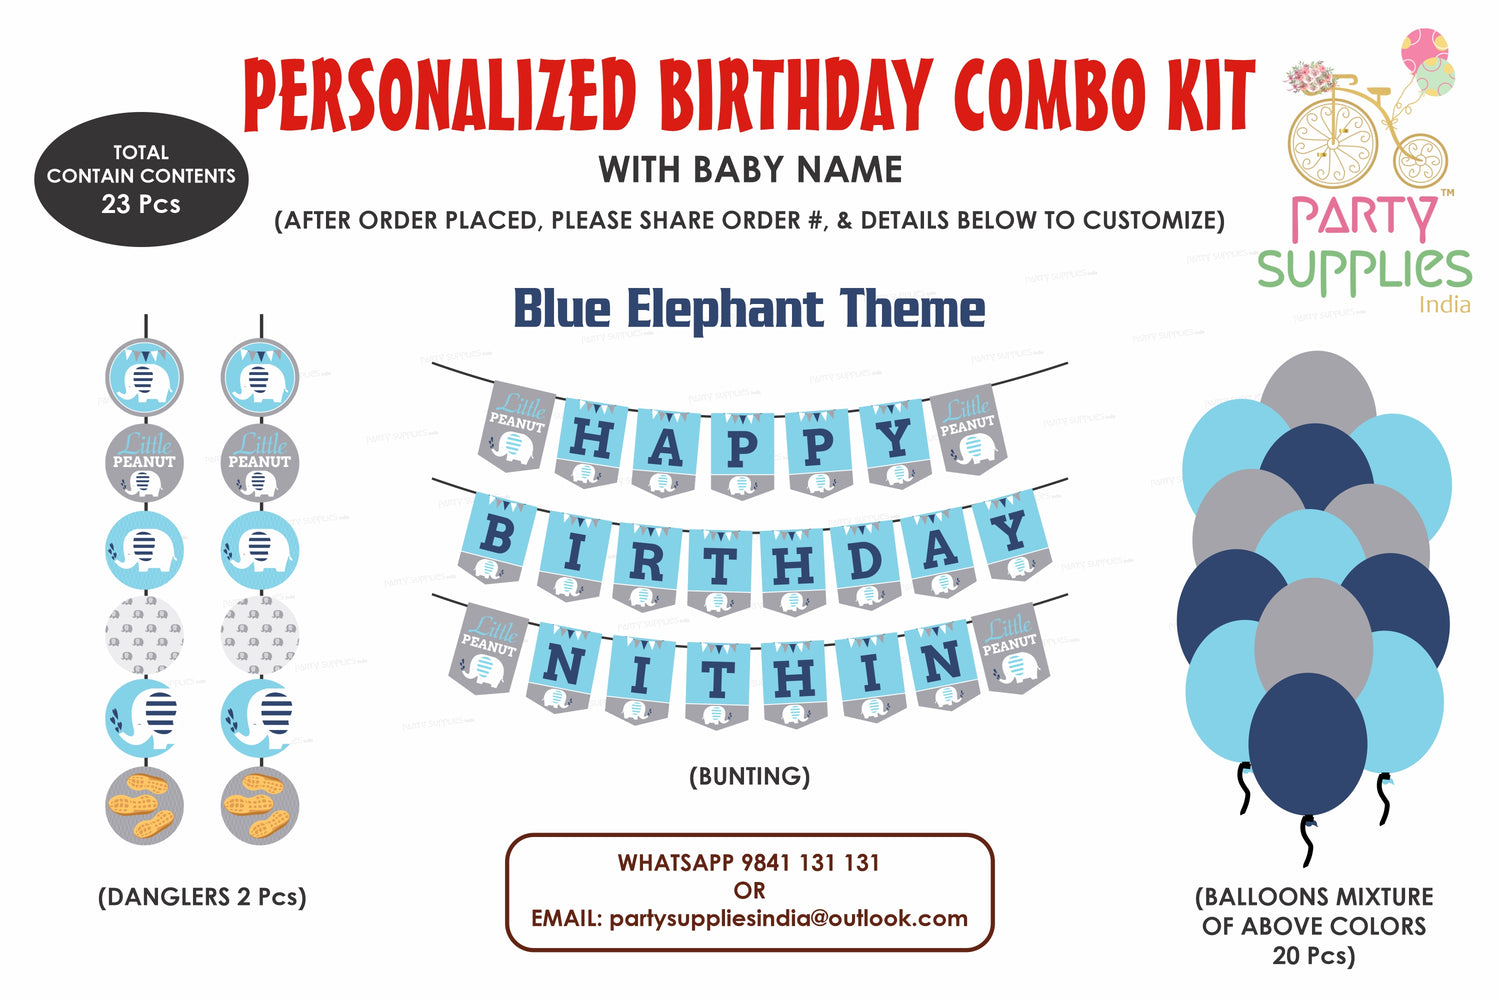 PSI Blue Elephant Theme Basic Kit